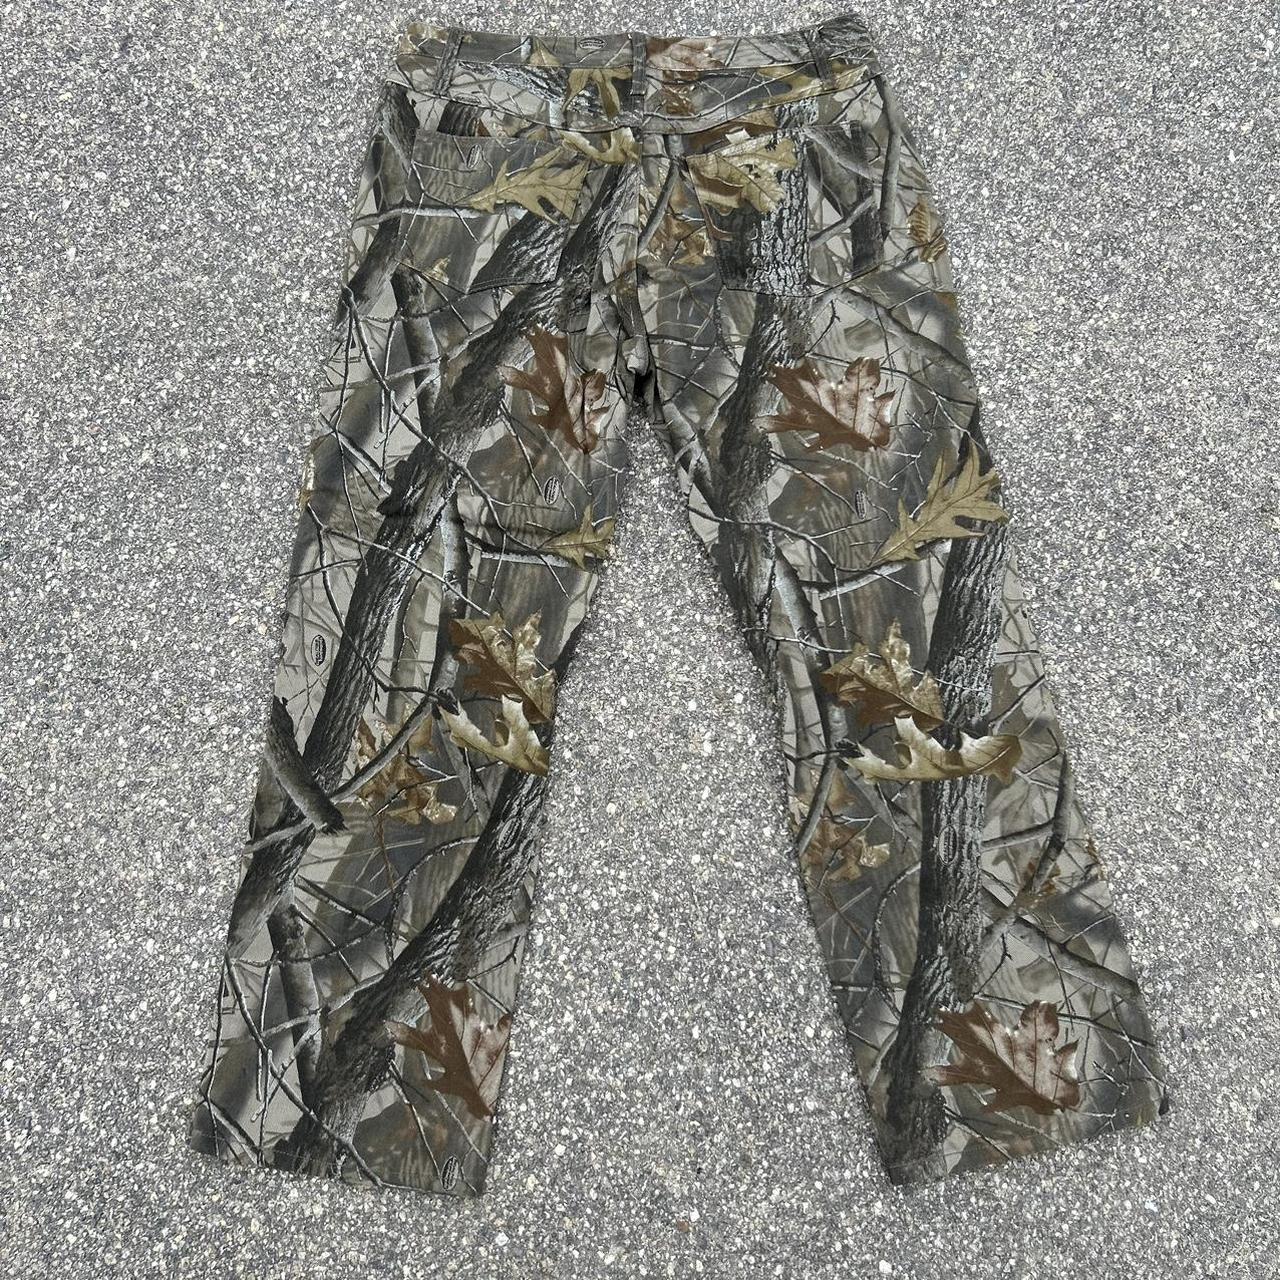 Realtree cargo pants size 36x32 good condition camo - Depop